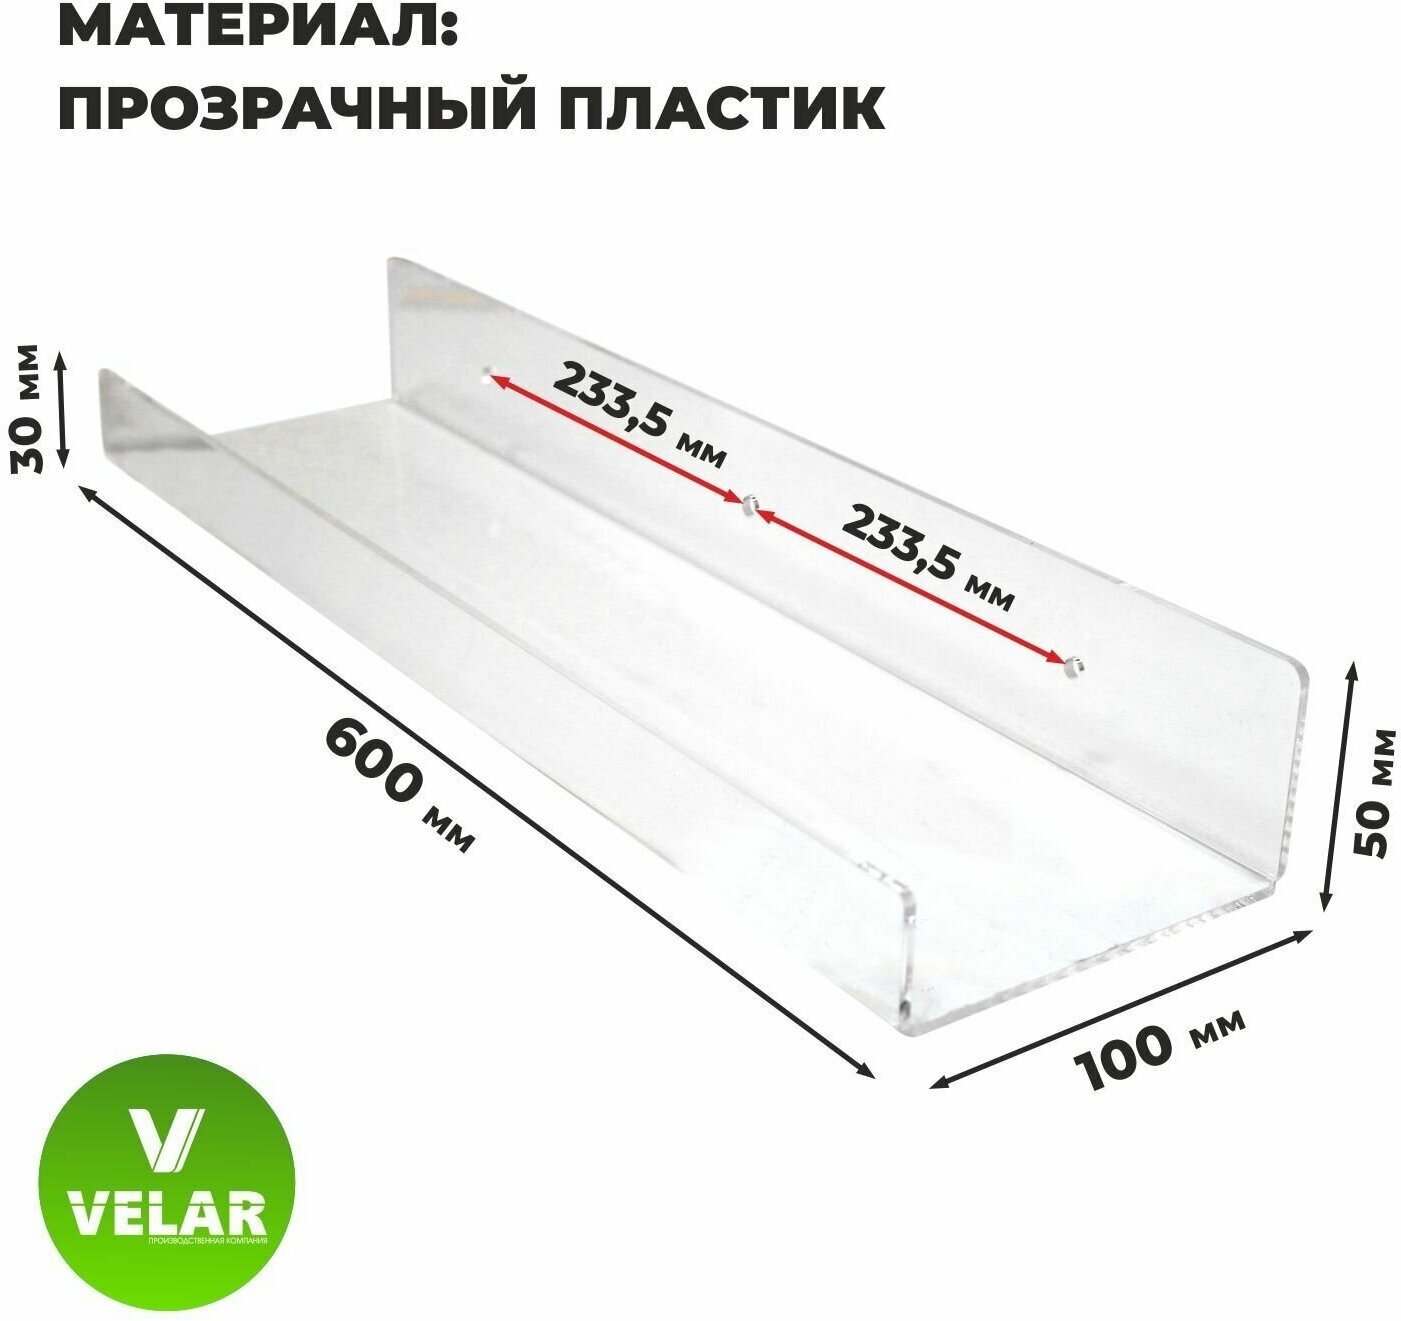 Полка настенная прямая интерьерная, 60х10.5 см, 1 шт, пластик 3 мм, цвет прозрачный, Velar